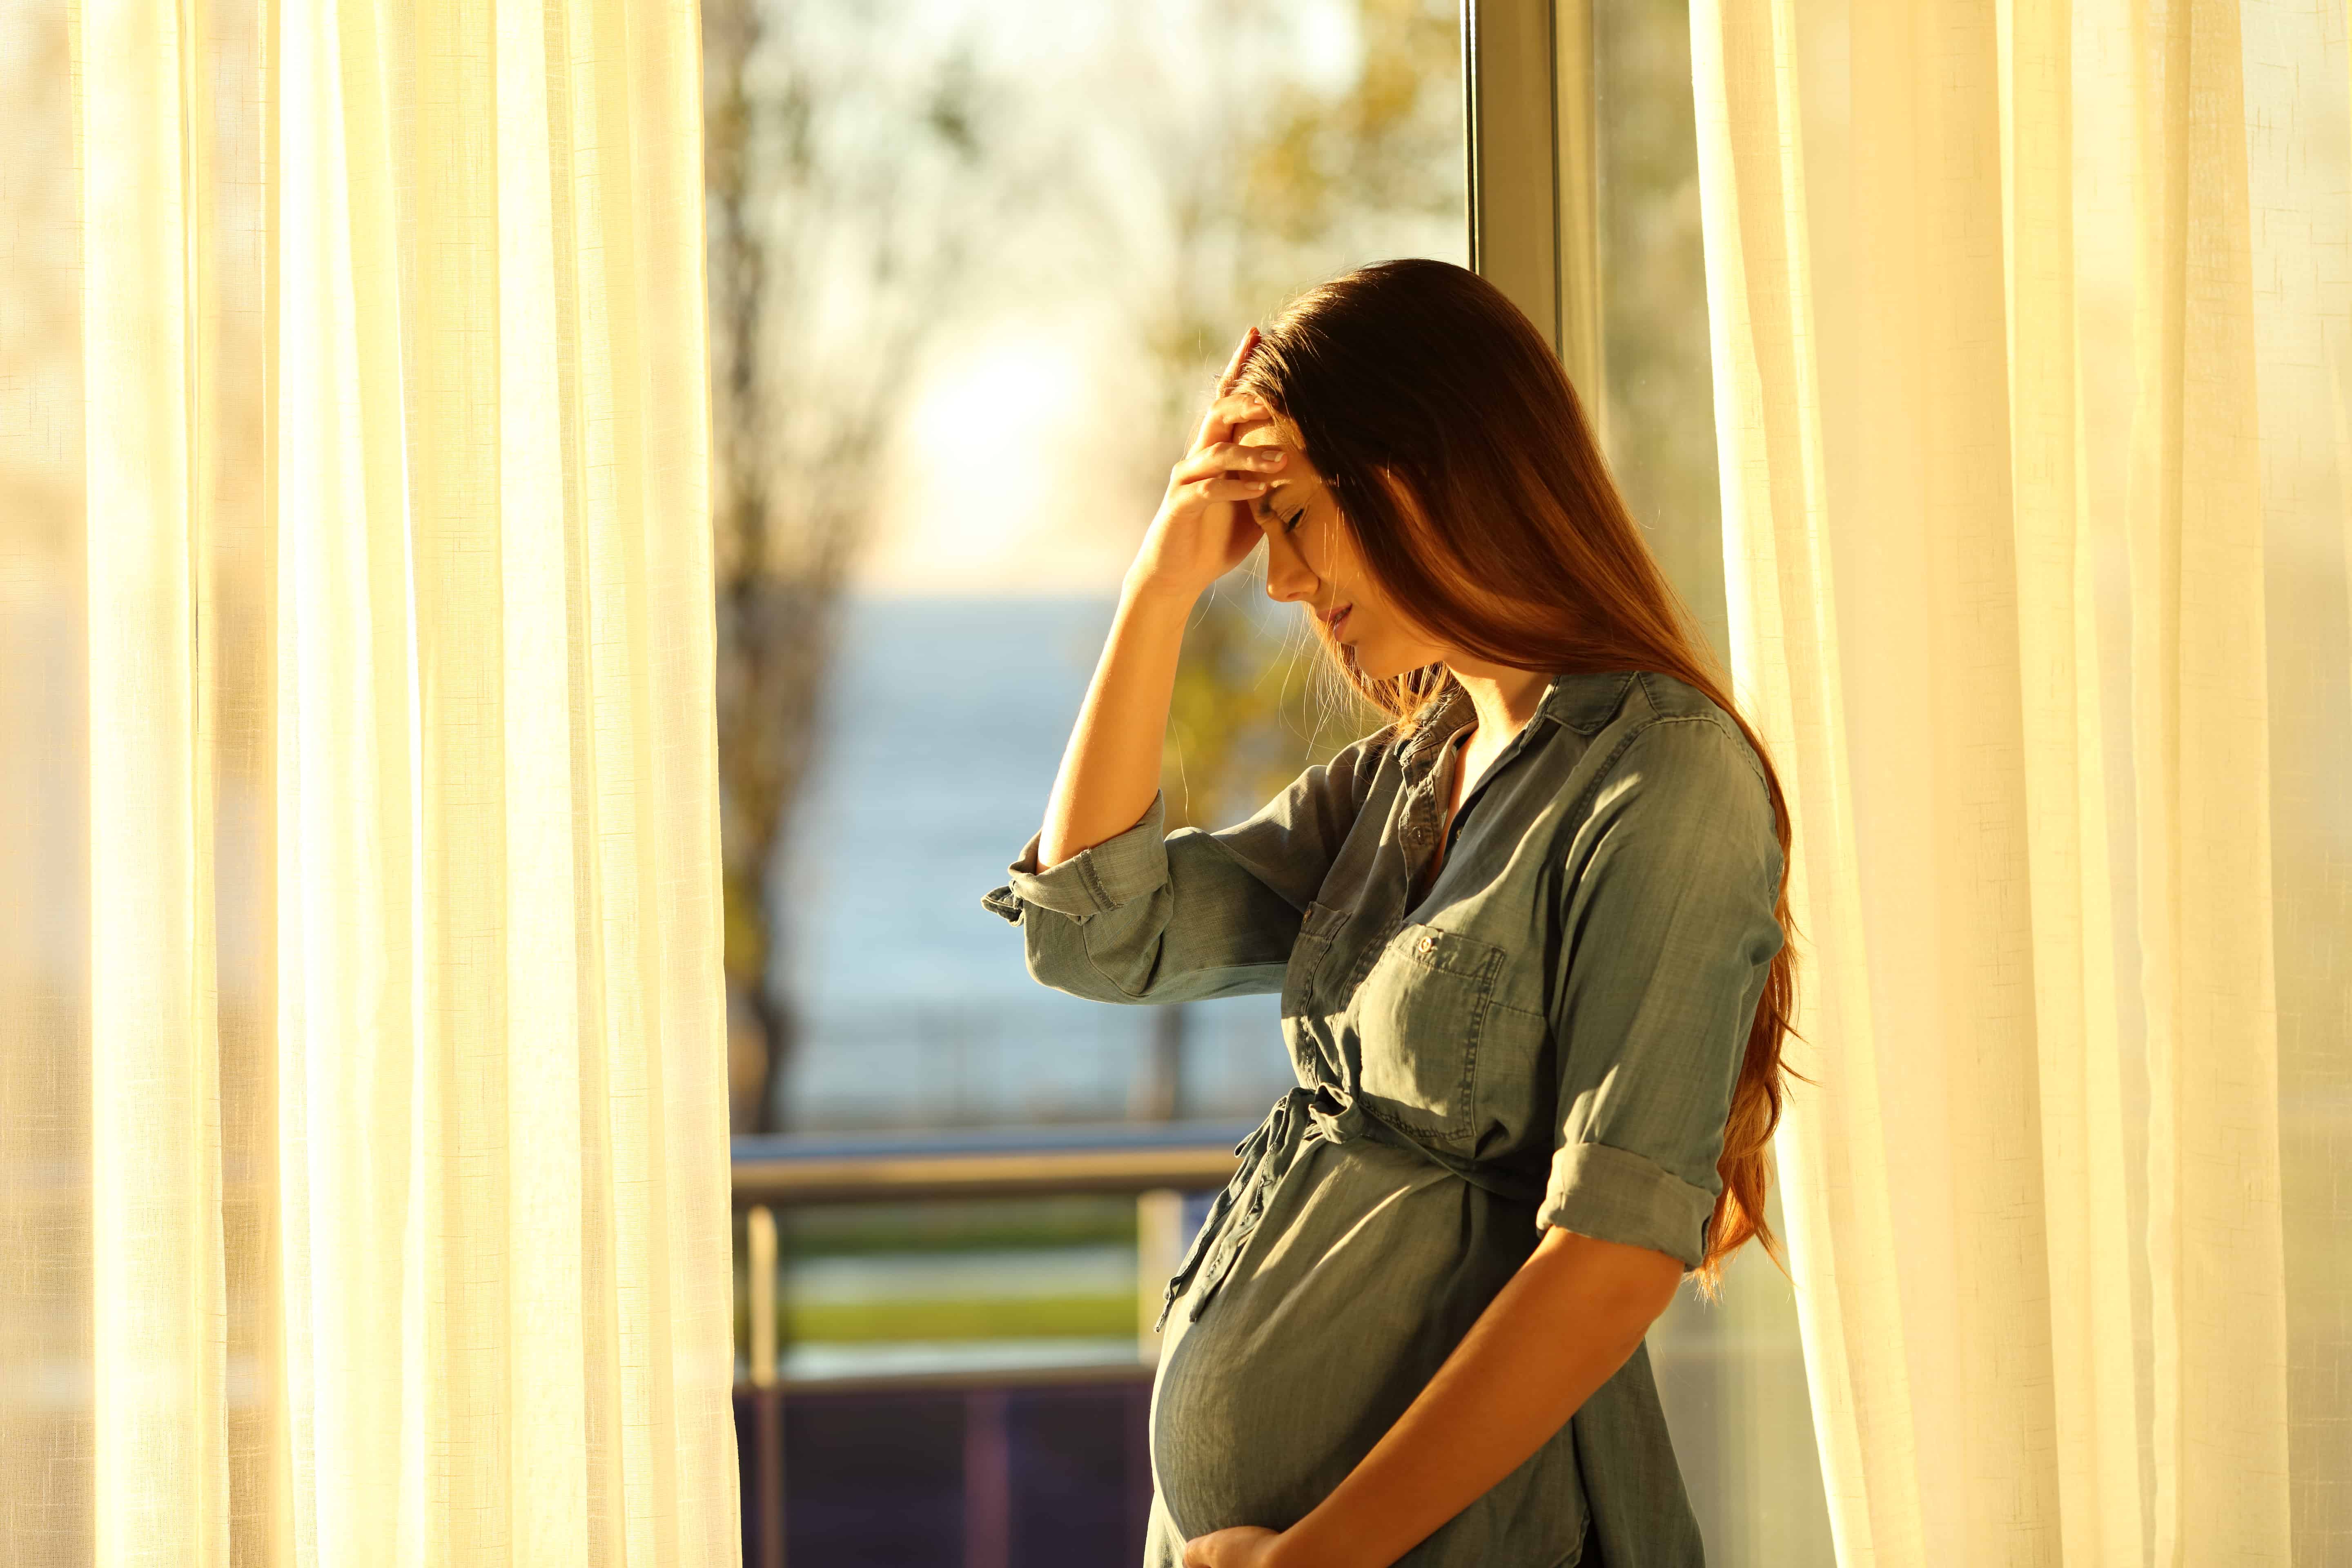 Unplanned pregnancy help in Arizona